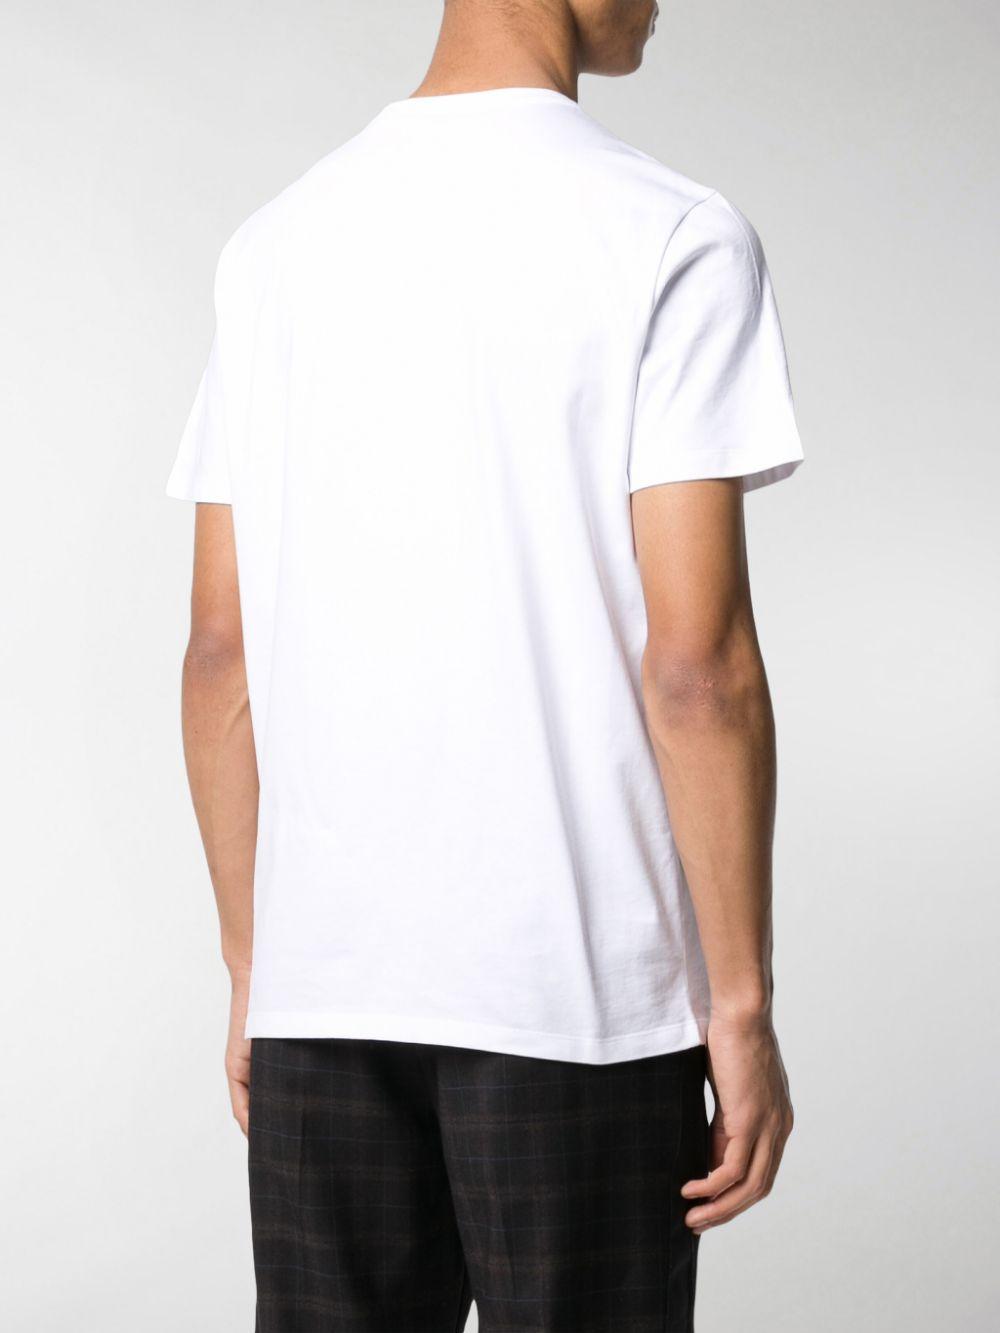 Moncler Genius 1952 X Mami Wata T-shirt in White for Men | Lyst